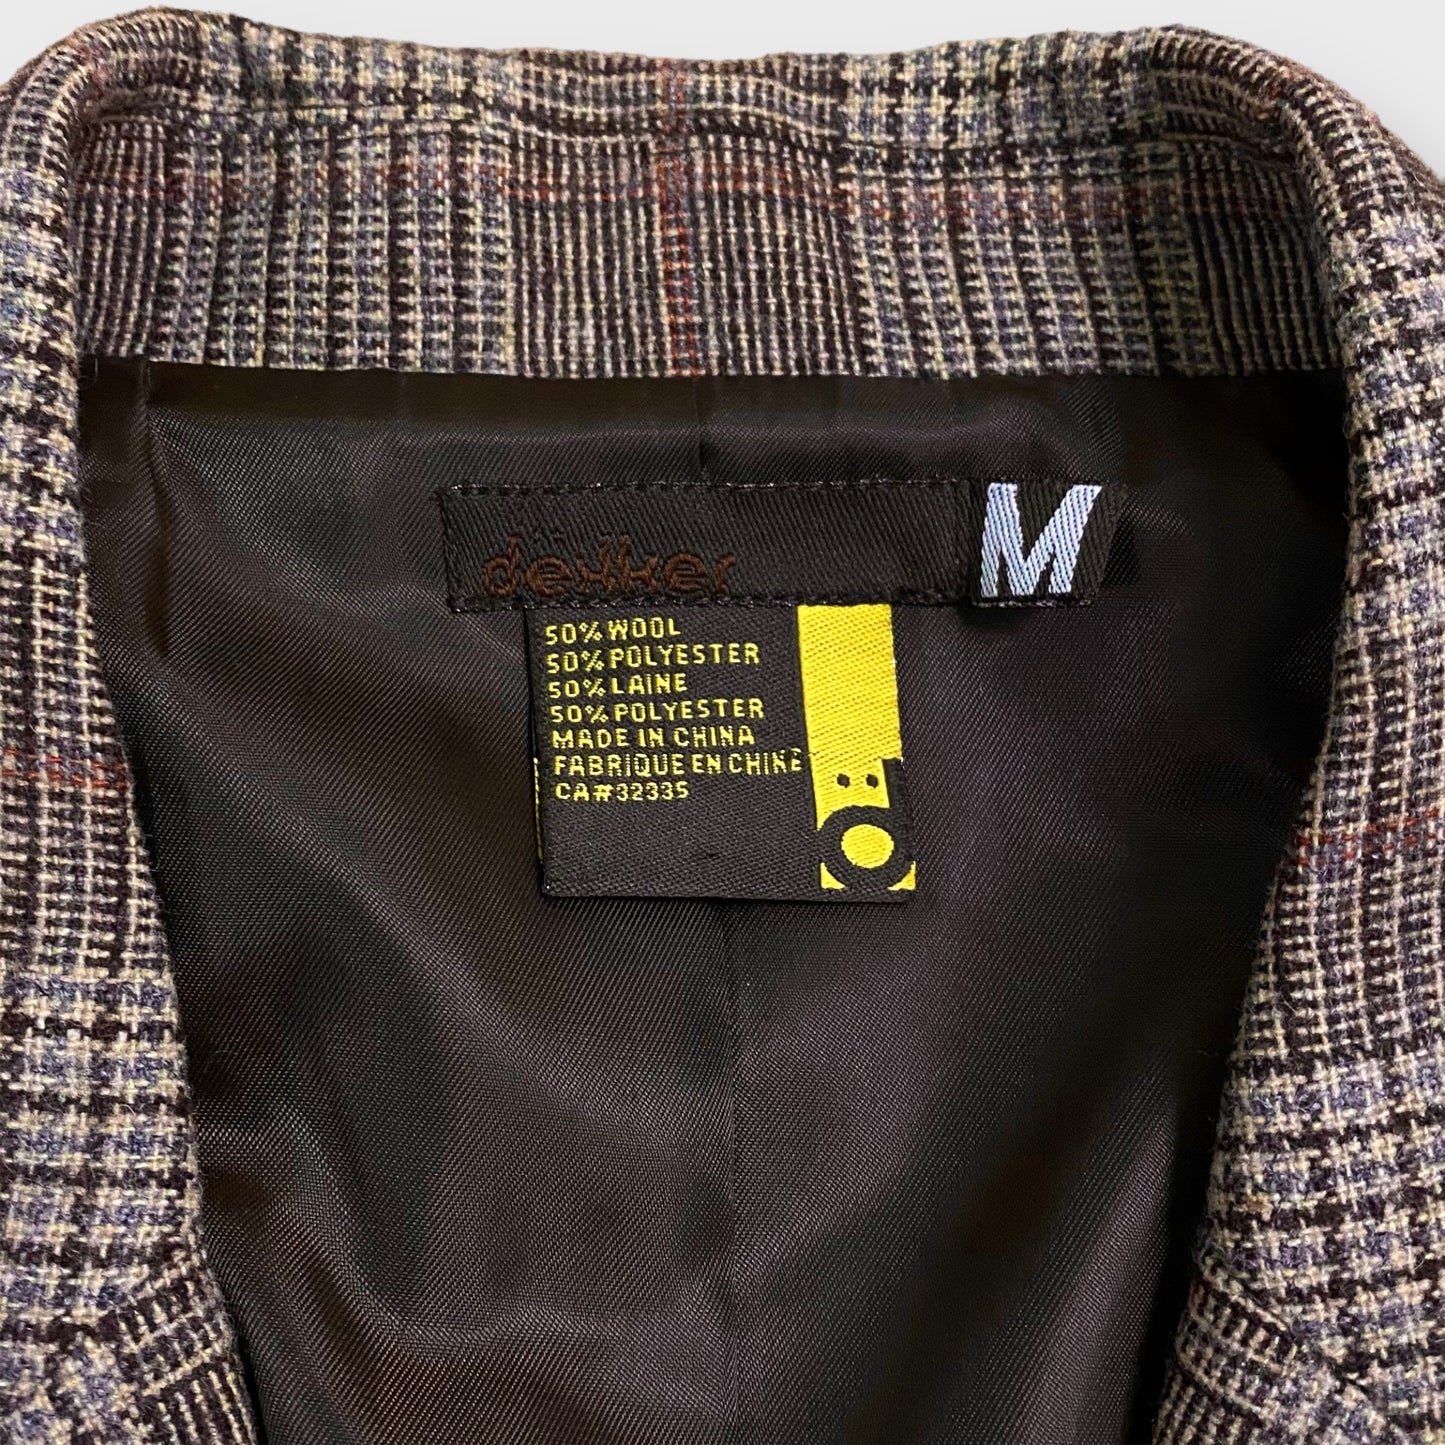 Plaid pattern tailored jacket